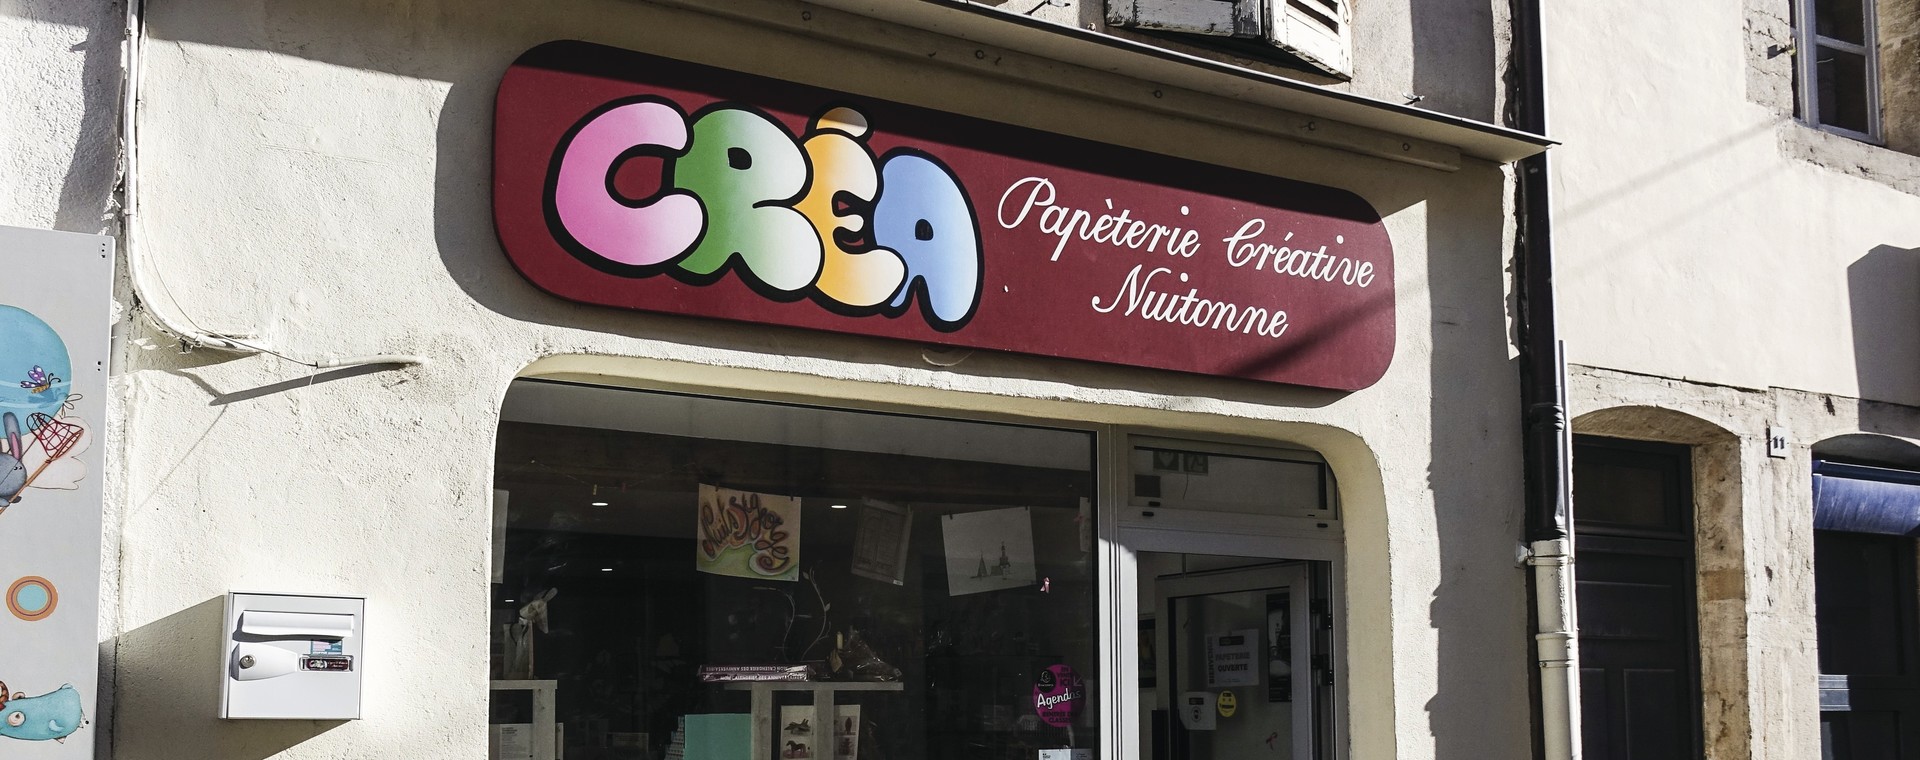 Boutique PAPETERIE CREATIVE NUITONNE - Beaune